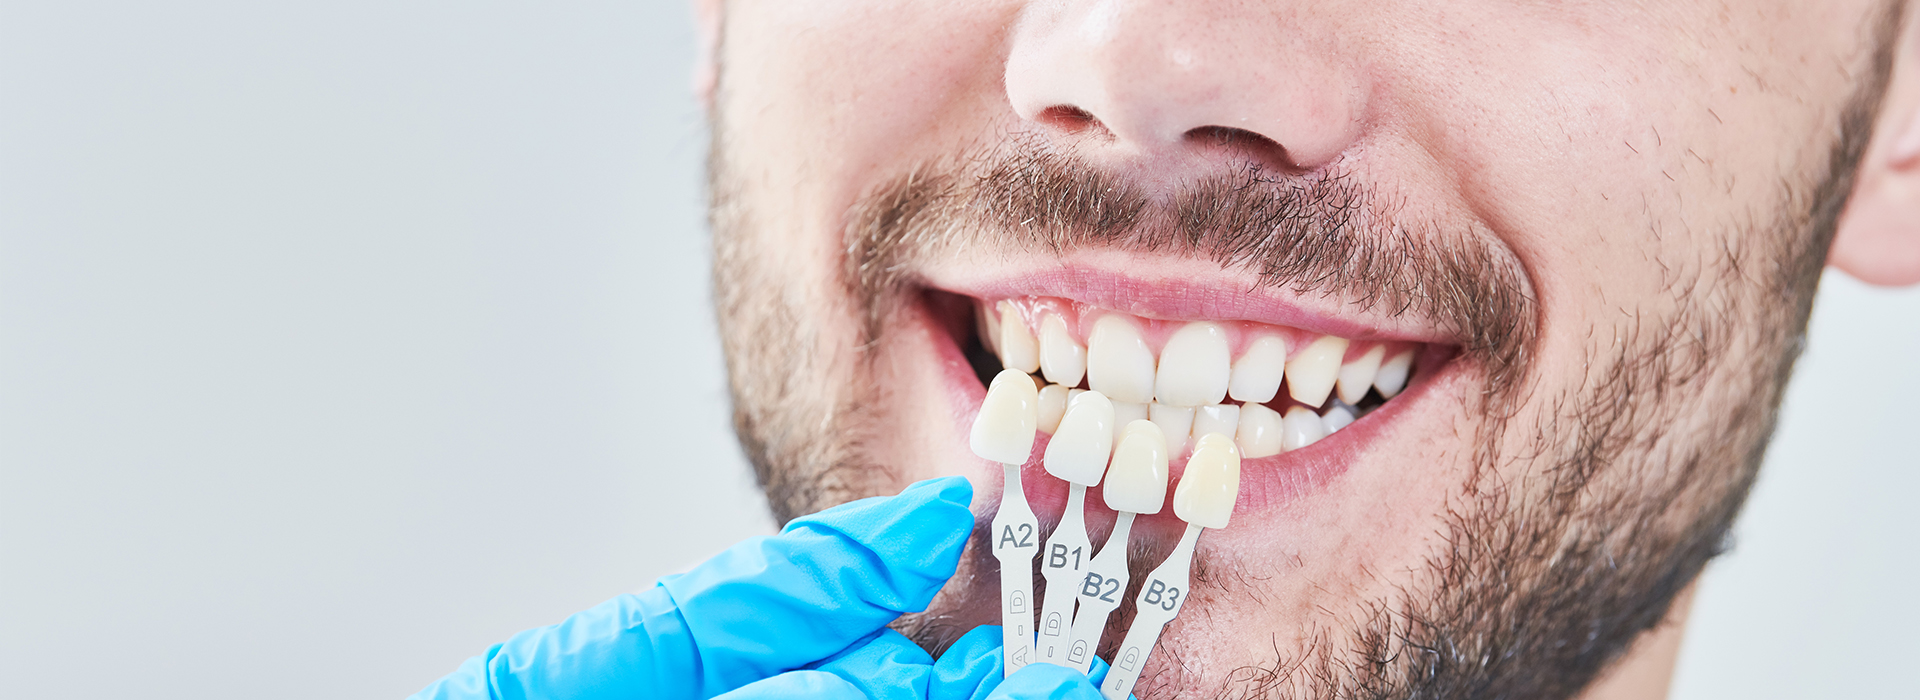 Plainfield Dental Care | iTero   Intraoral Scanner, Dental Fillings and Preventative Dentistry